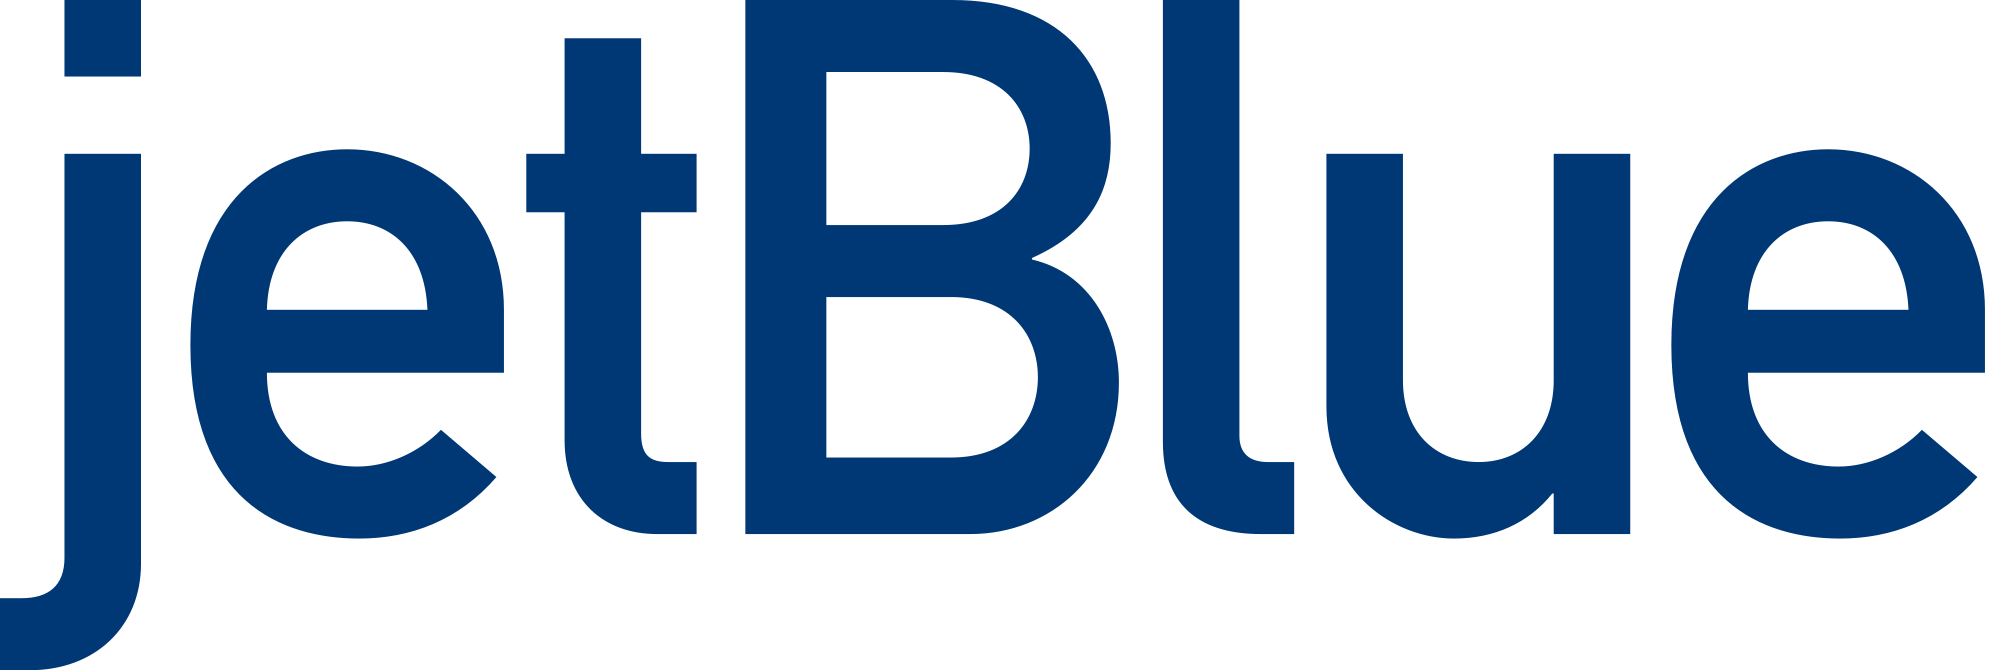 logo-jetblue-airways-(1)-2017-12